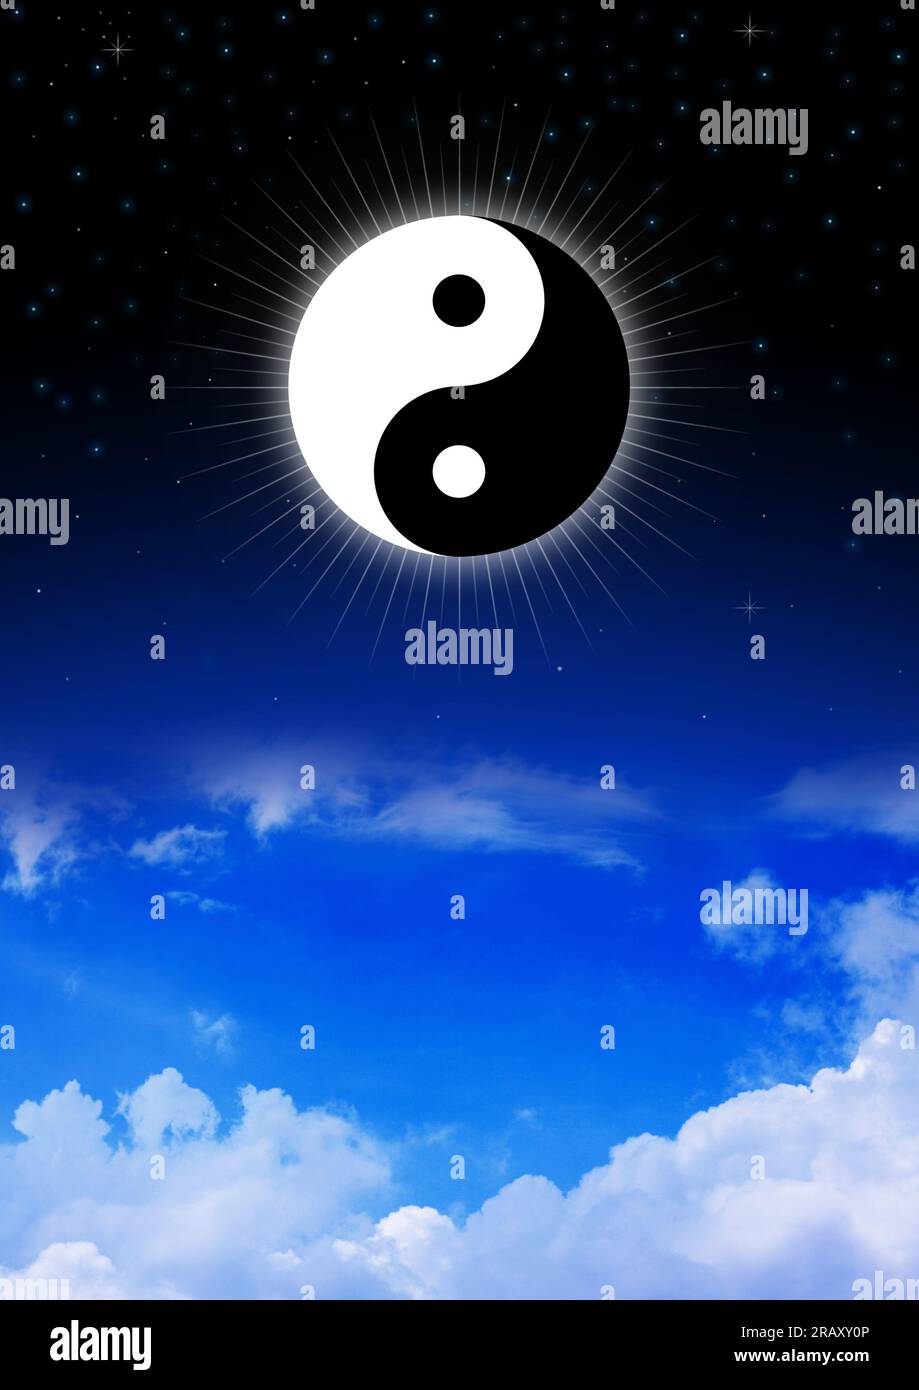 Yin and Yang symbol of Taoism on night sky Stock Photo